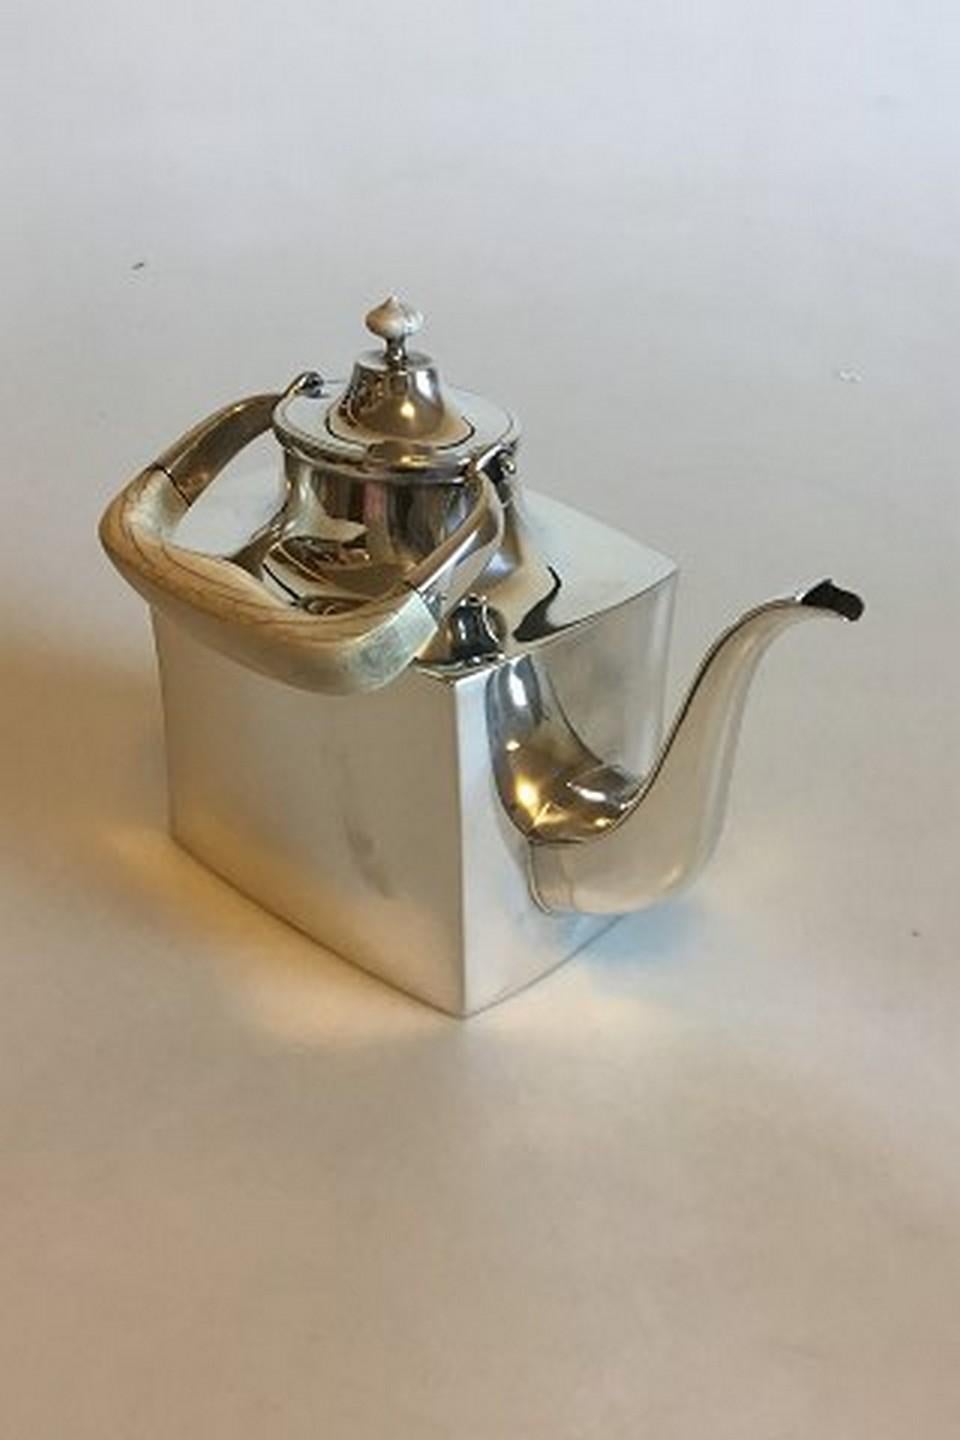 Hans Hansen sterling silver tea pot No 454. From 1972. Measures: 16 cm / 6 19/64 in. Weighs 872 g / 30.80 oz.
Item no.: 349403

Item no.: 336180.